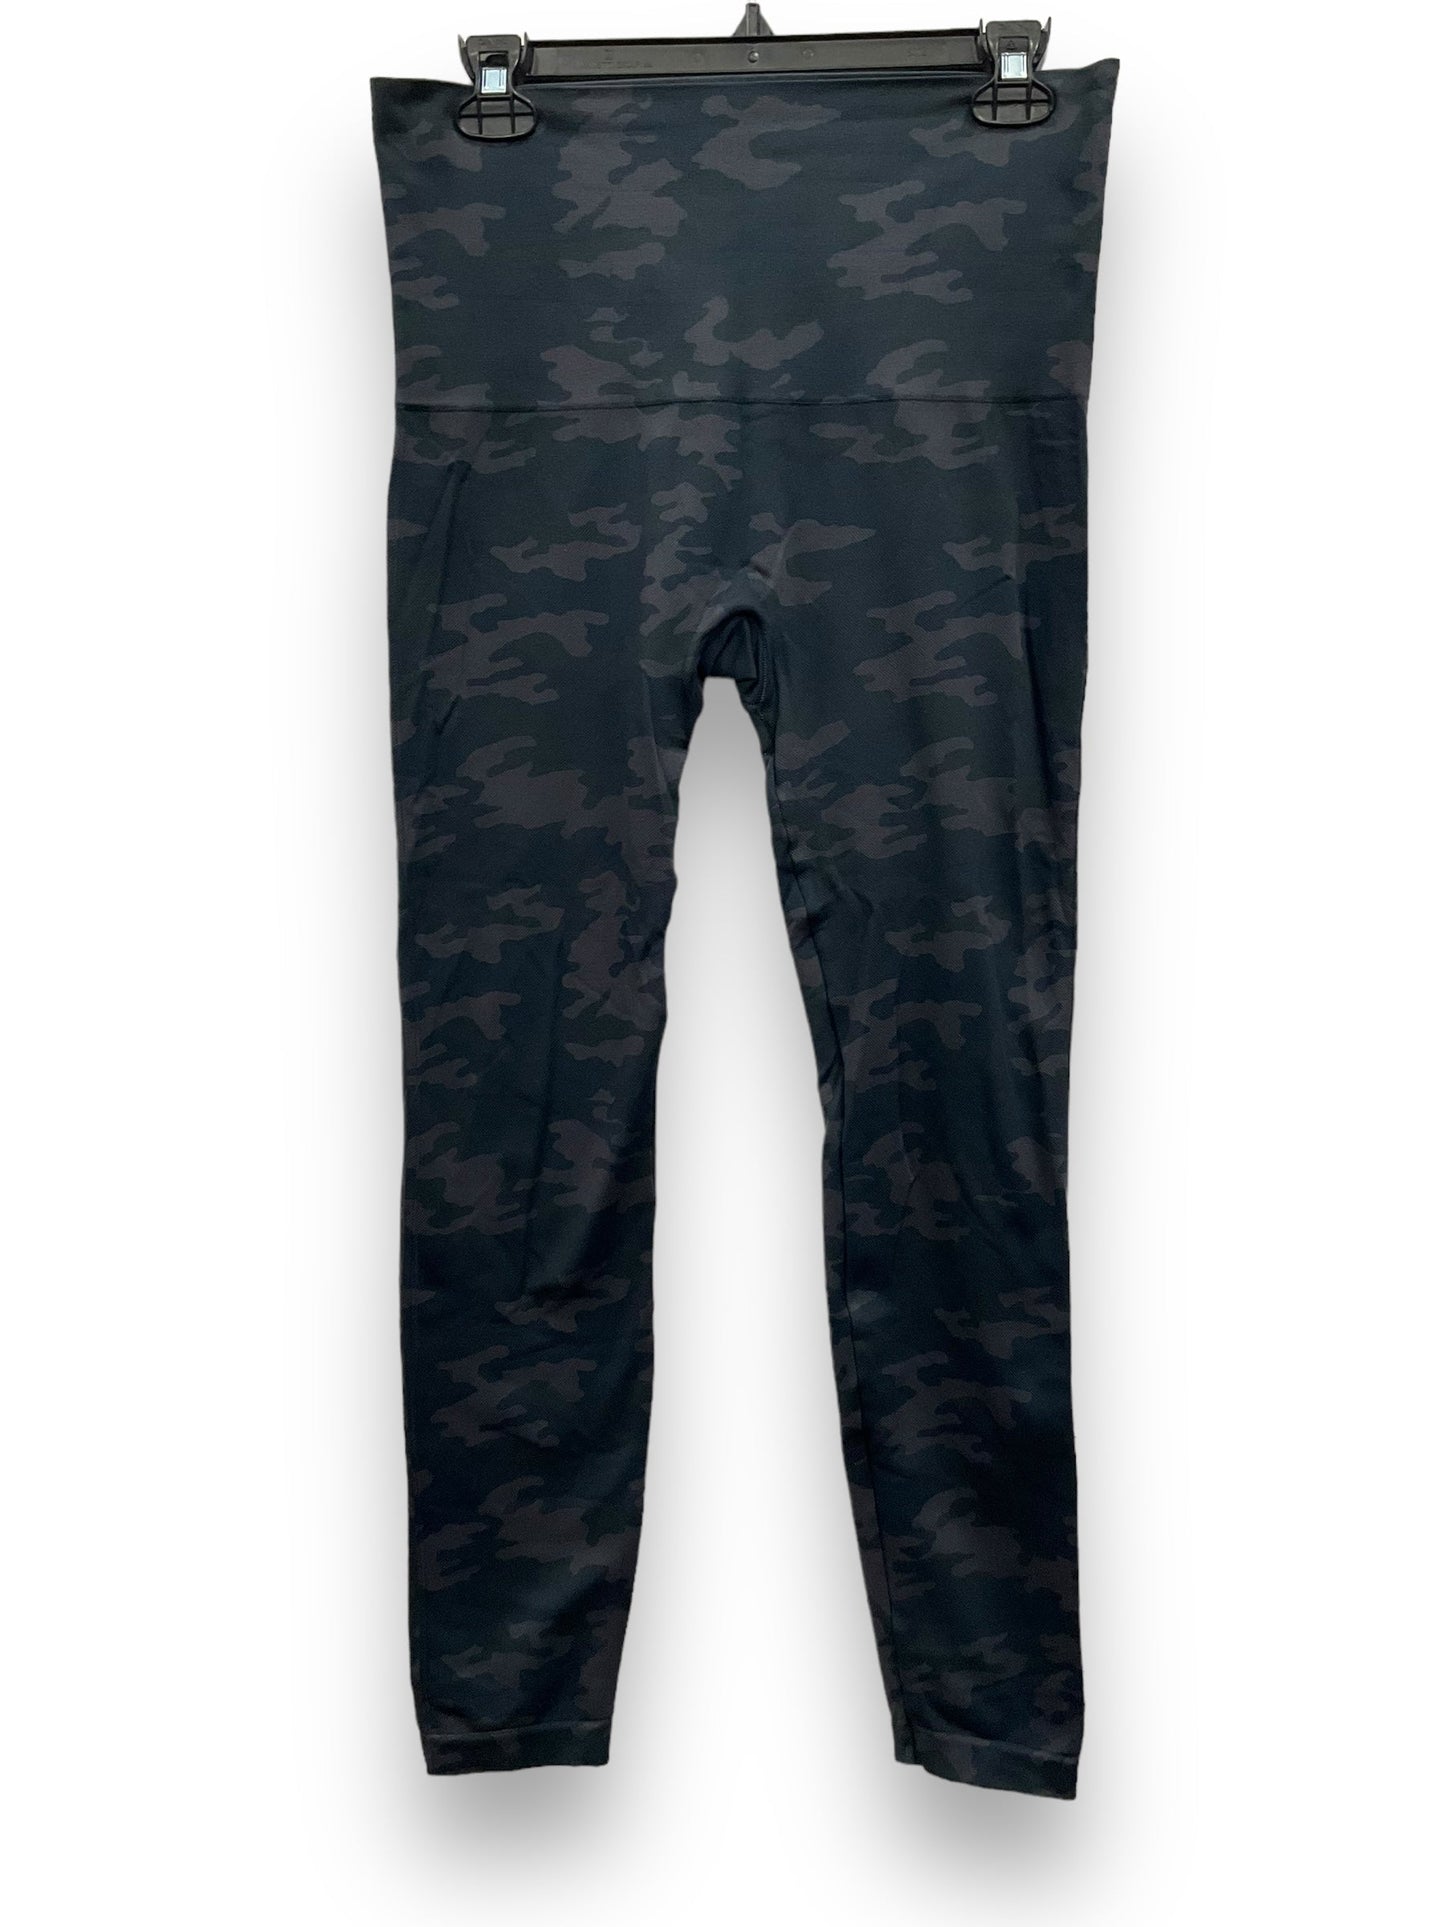 Camouflage Print Athletic Leggings Spanx, Size 1x